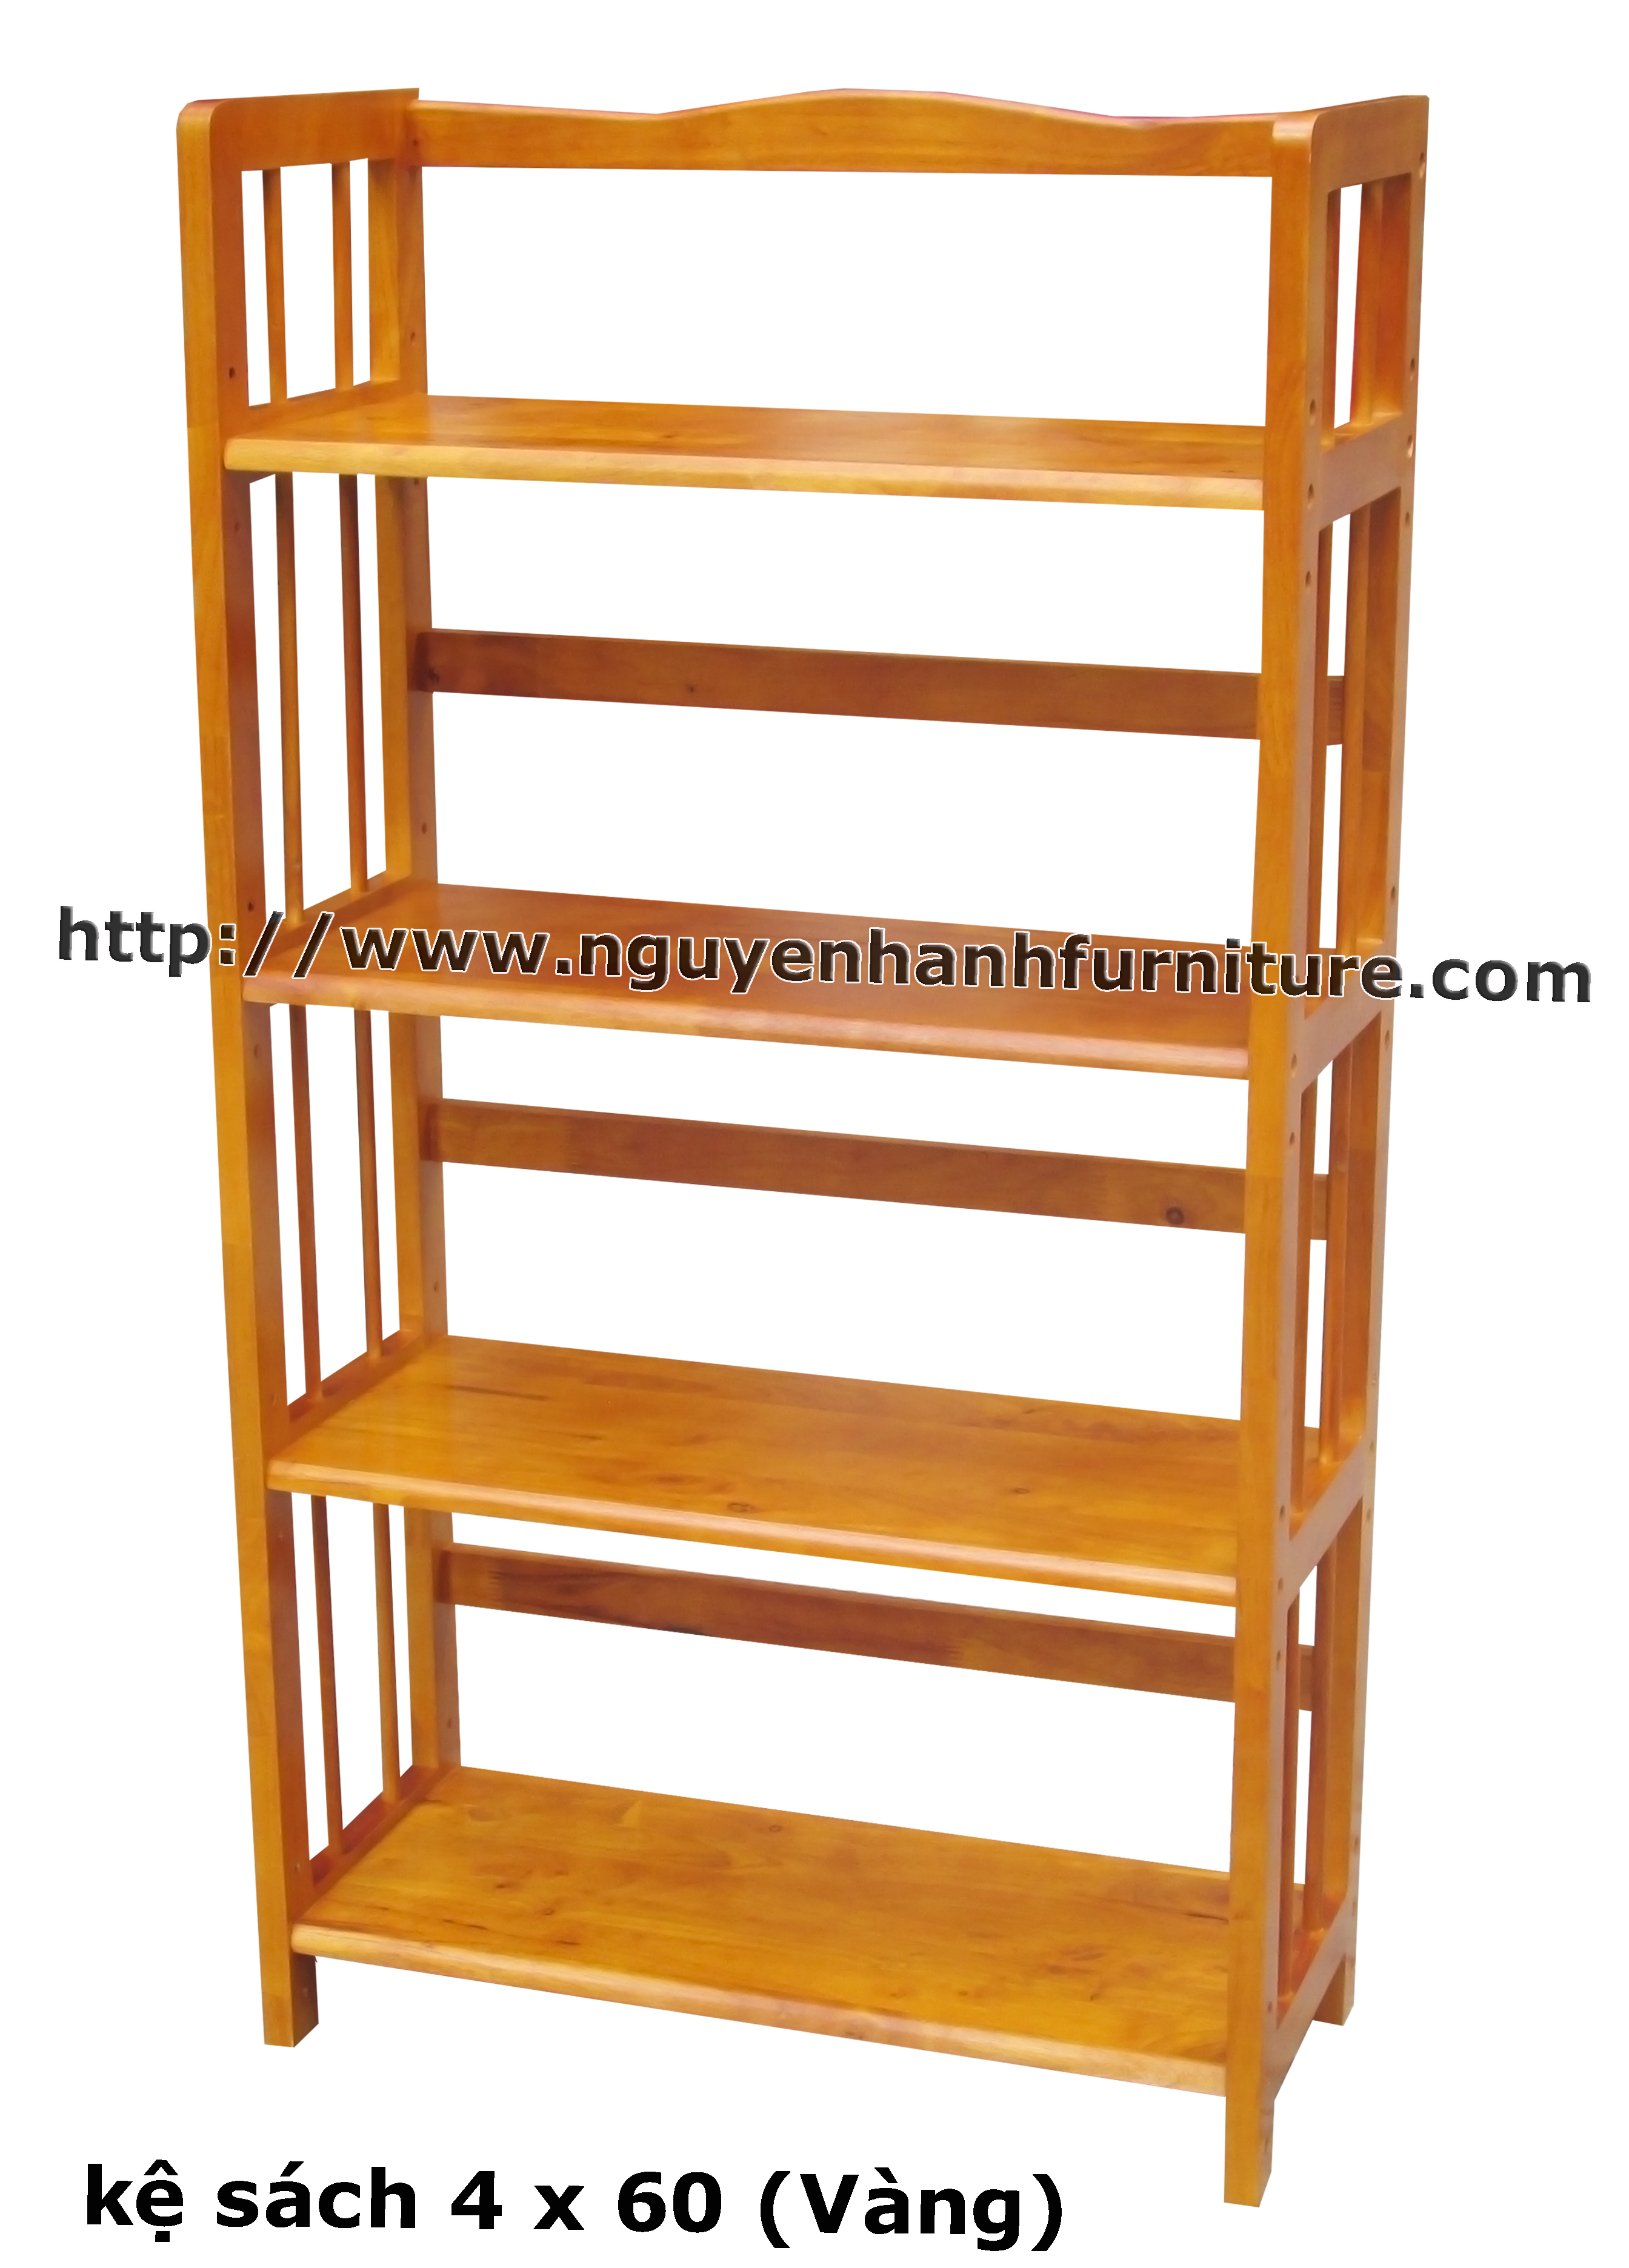 Name product: 4 storey Adjustable Bookshelf 60 (Yellow) - Dimensions: 60 x 28 x 120 (H) - Description: Wood natural rubber